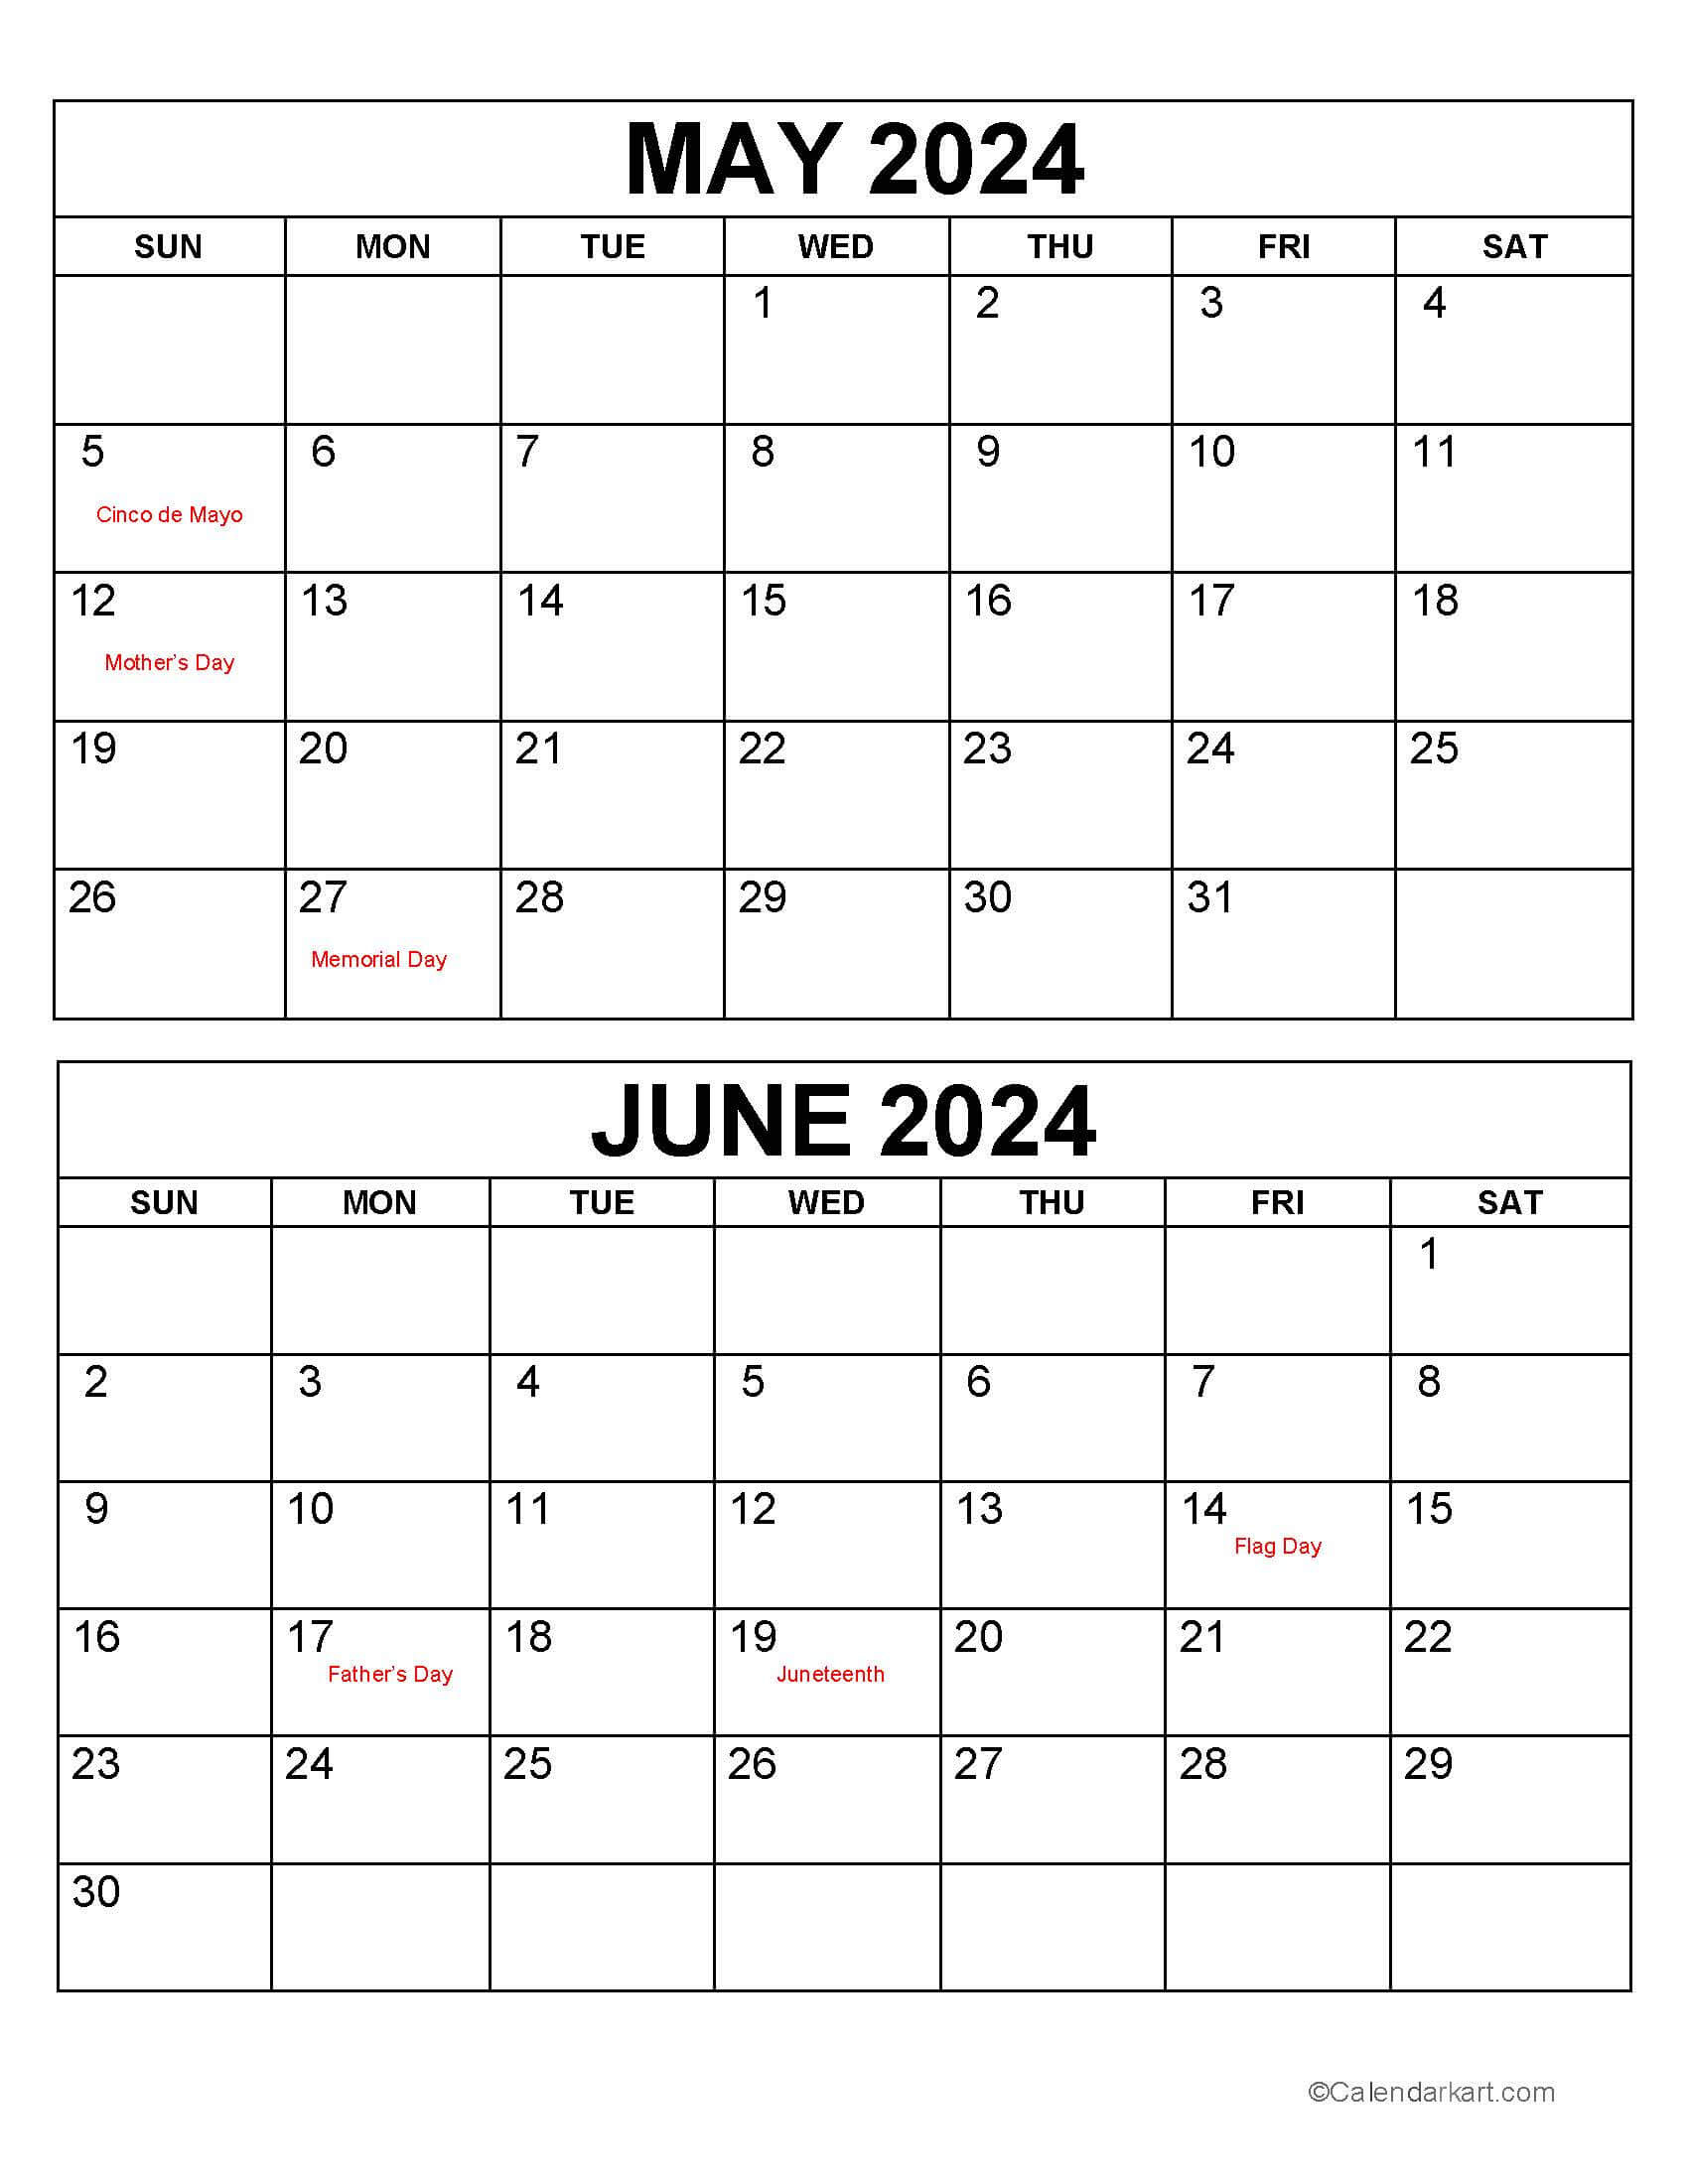 May June 2024 Calendars (3Rd Bi-Monthly) - Calendarkart with May-June 2024 Calendar